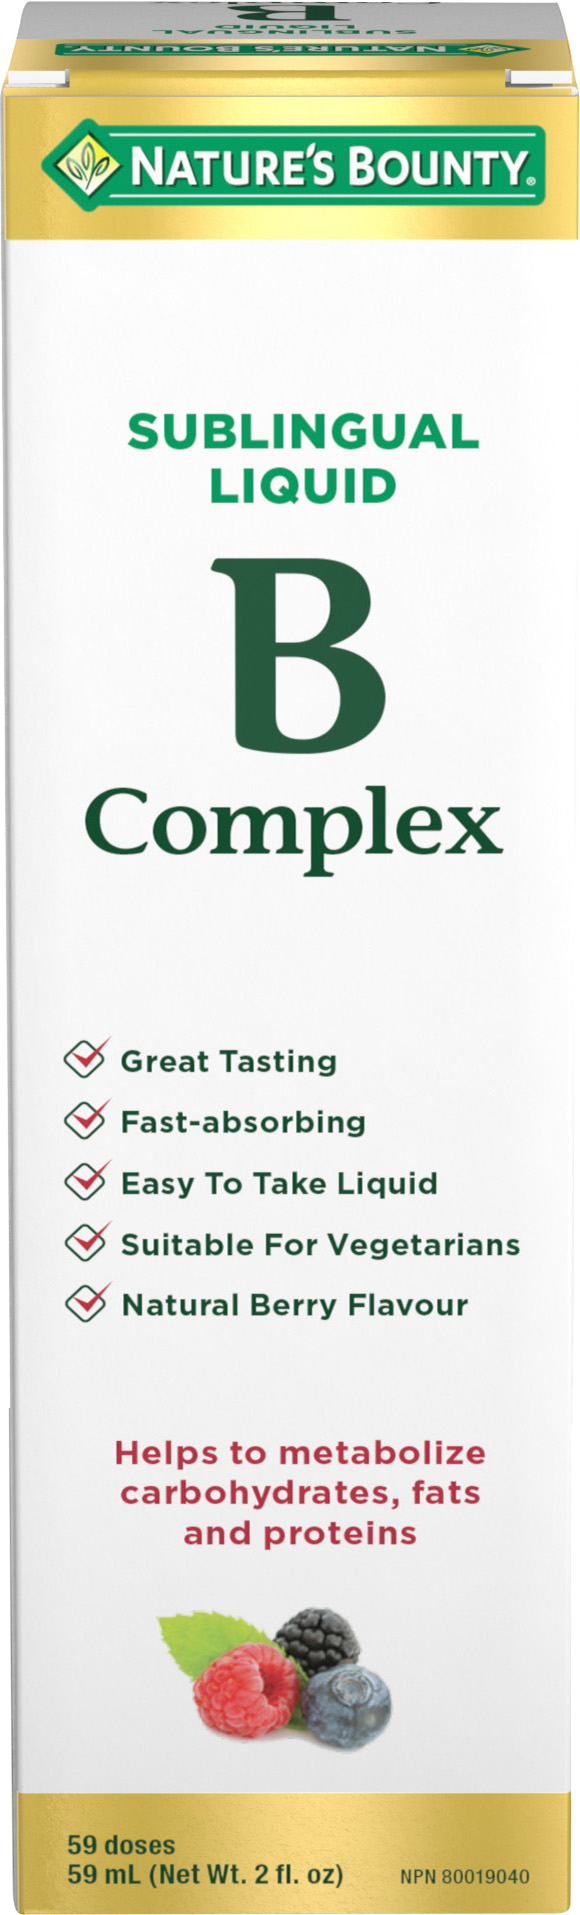 Liquid B complex